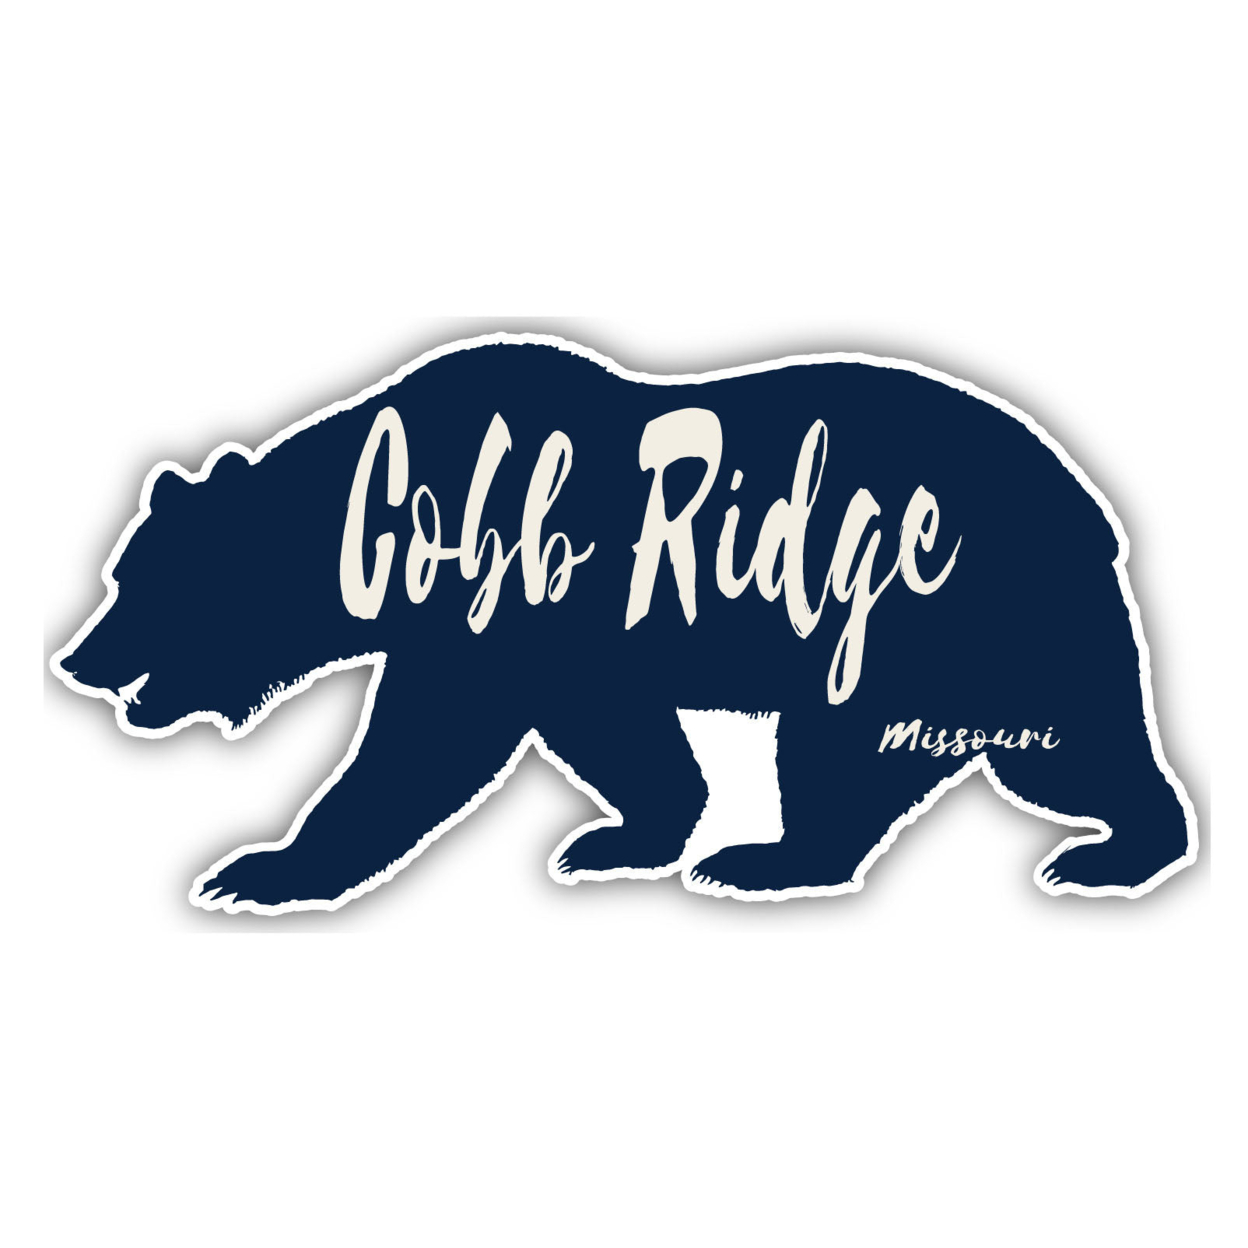 Cobb Ridge Missouri Souvenir Decorative Stickers (Choose Theme And Size) - 4-Pack, 10-Inch, Bear